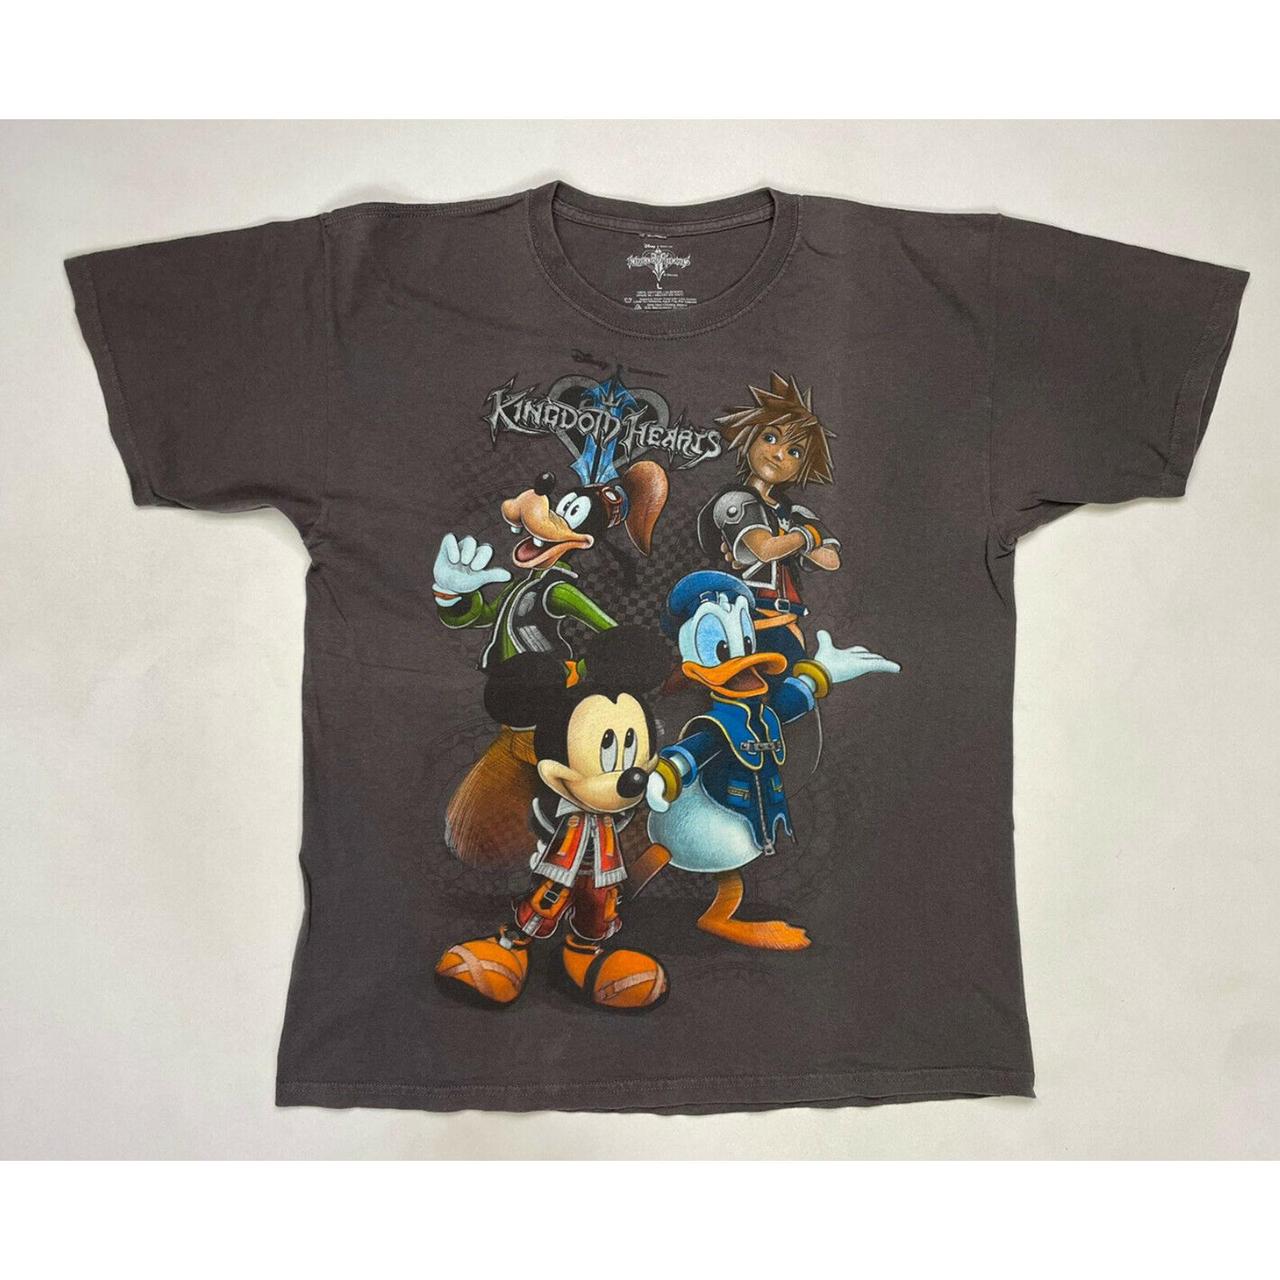 Product Image 1 - Disney Kingdom Hearts Graphic T-shirt